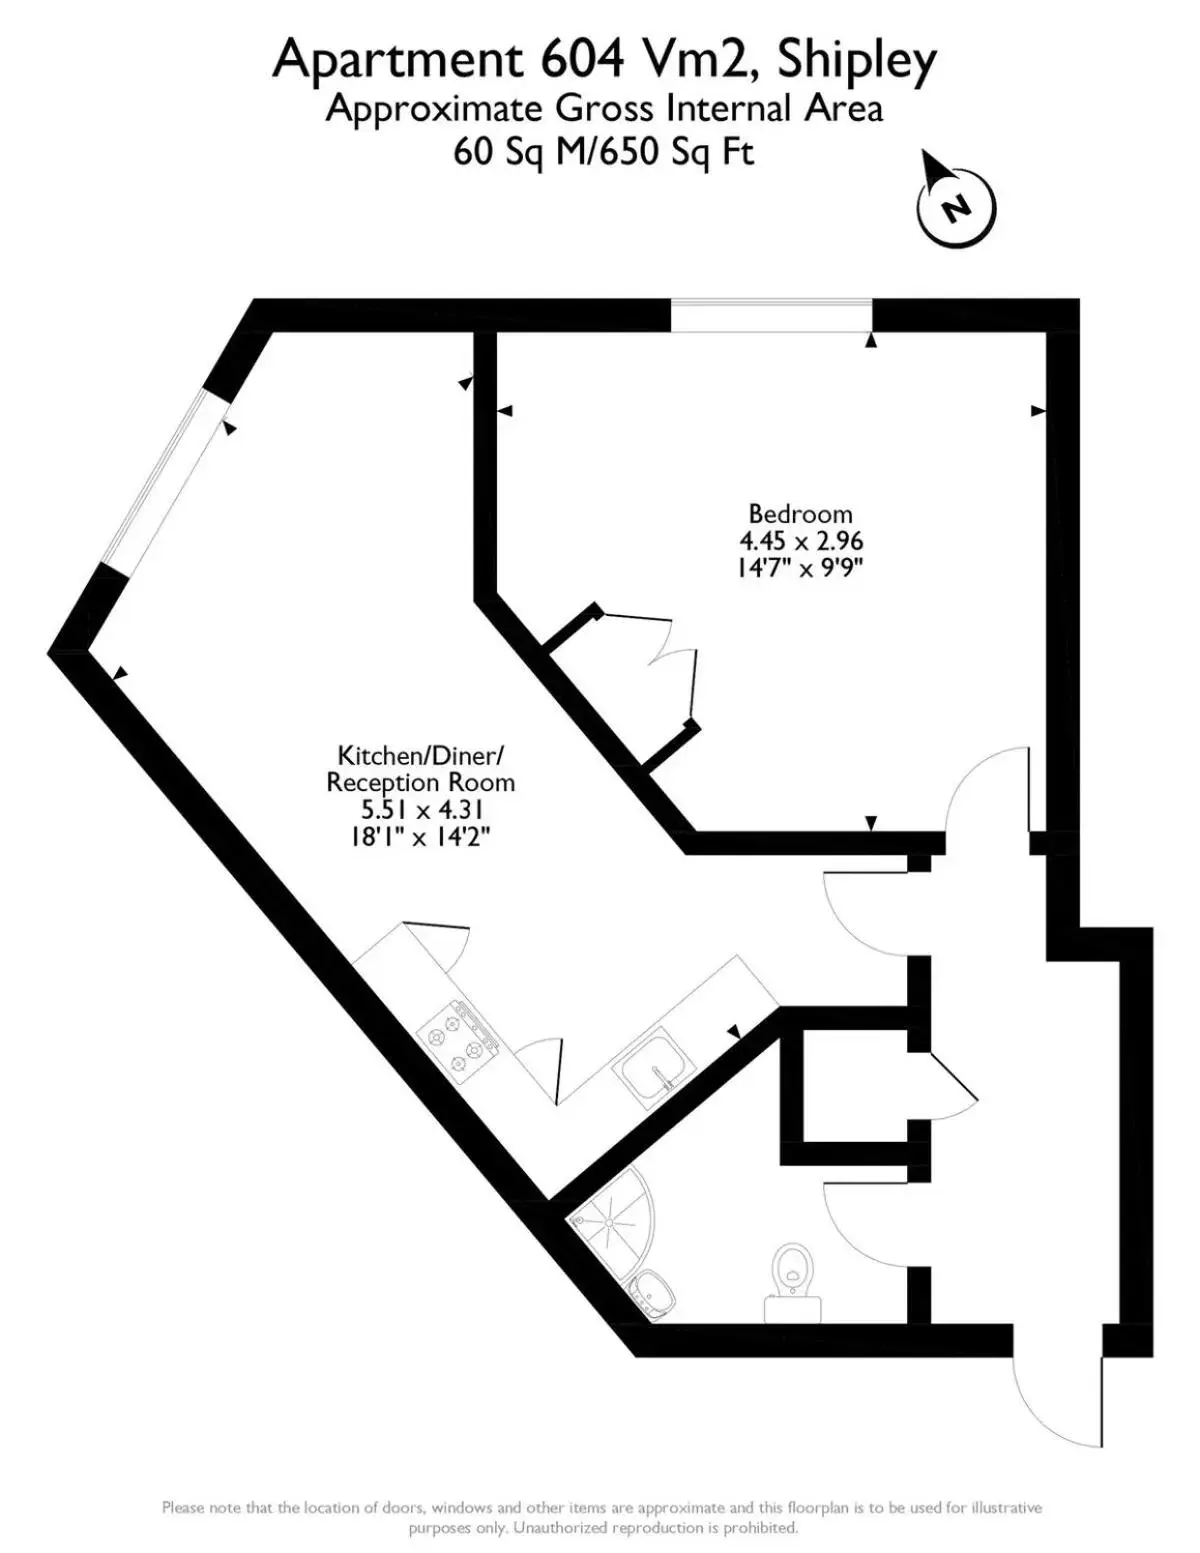 Floor Plan in Victoria Mills Apartment Shipley